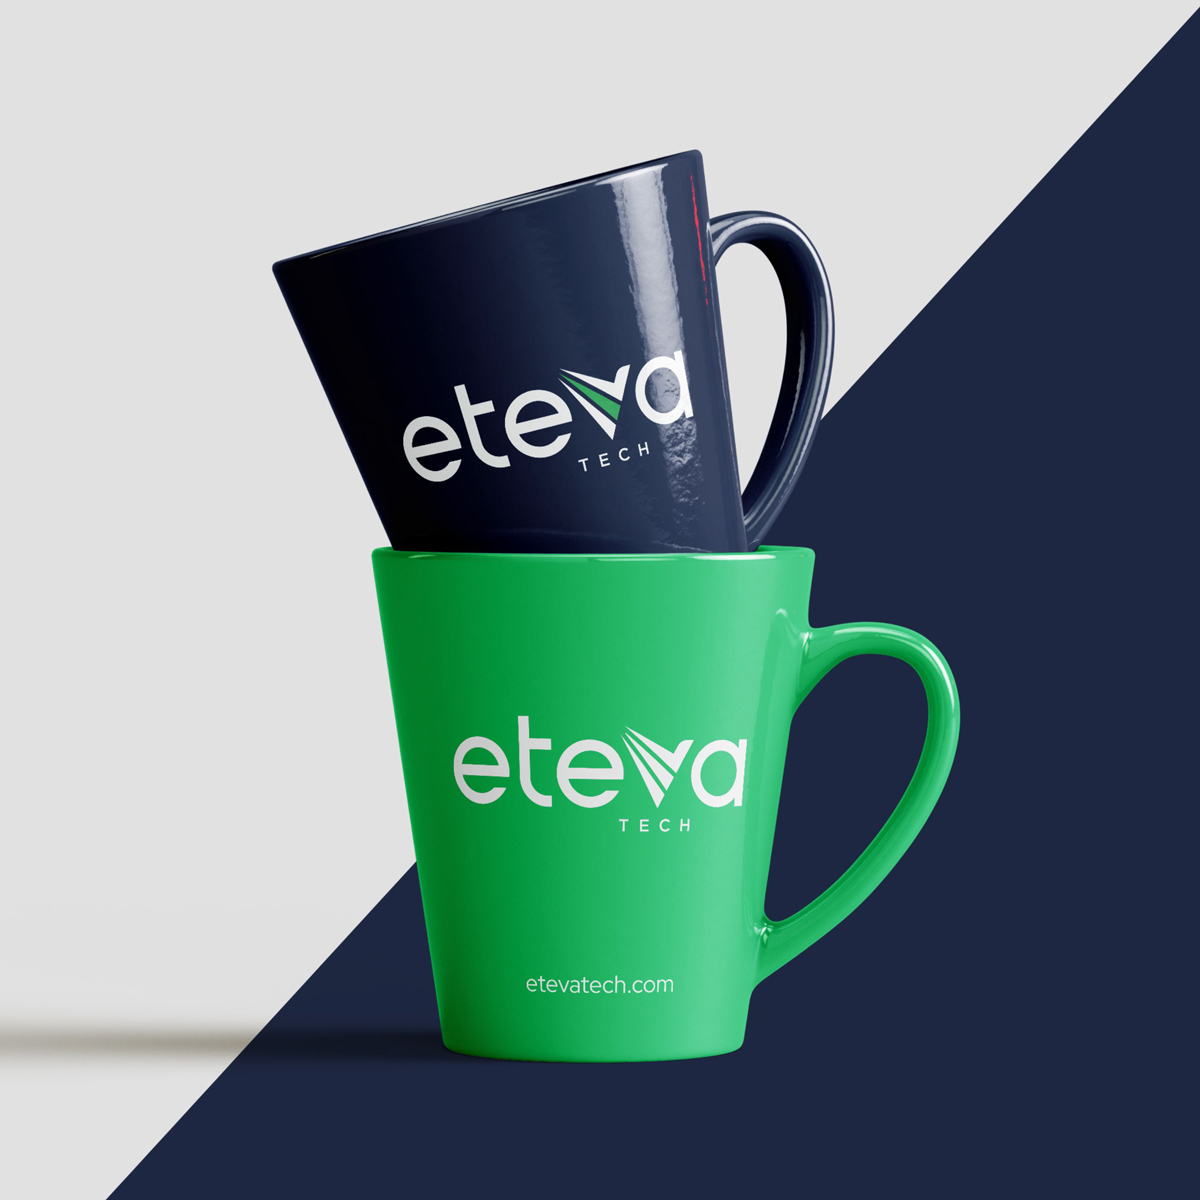 Eteva tech mugs design